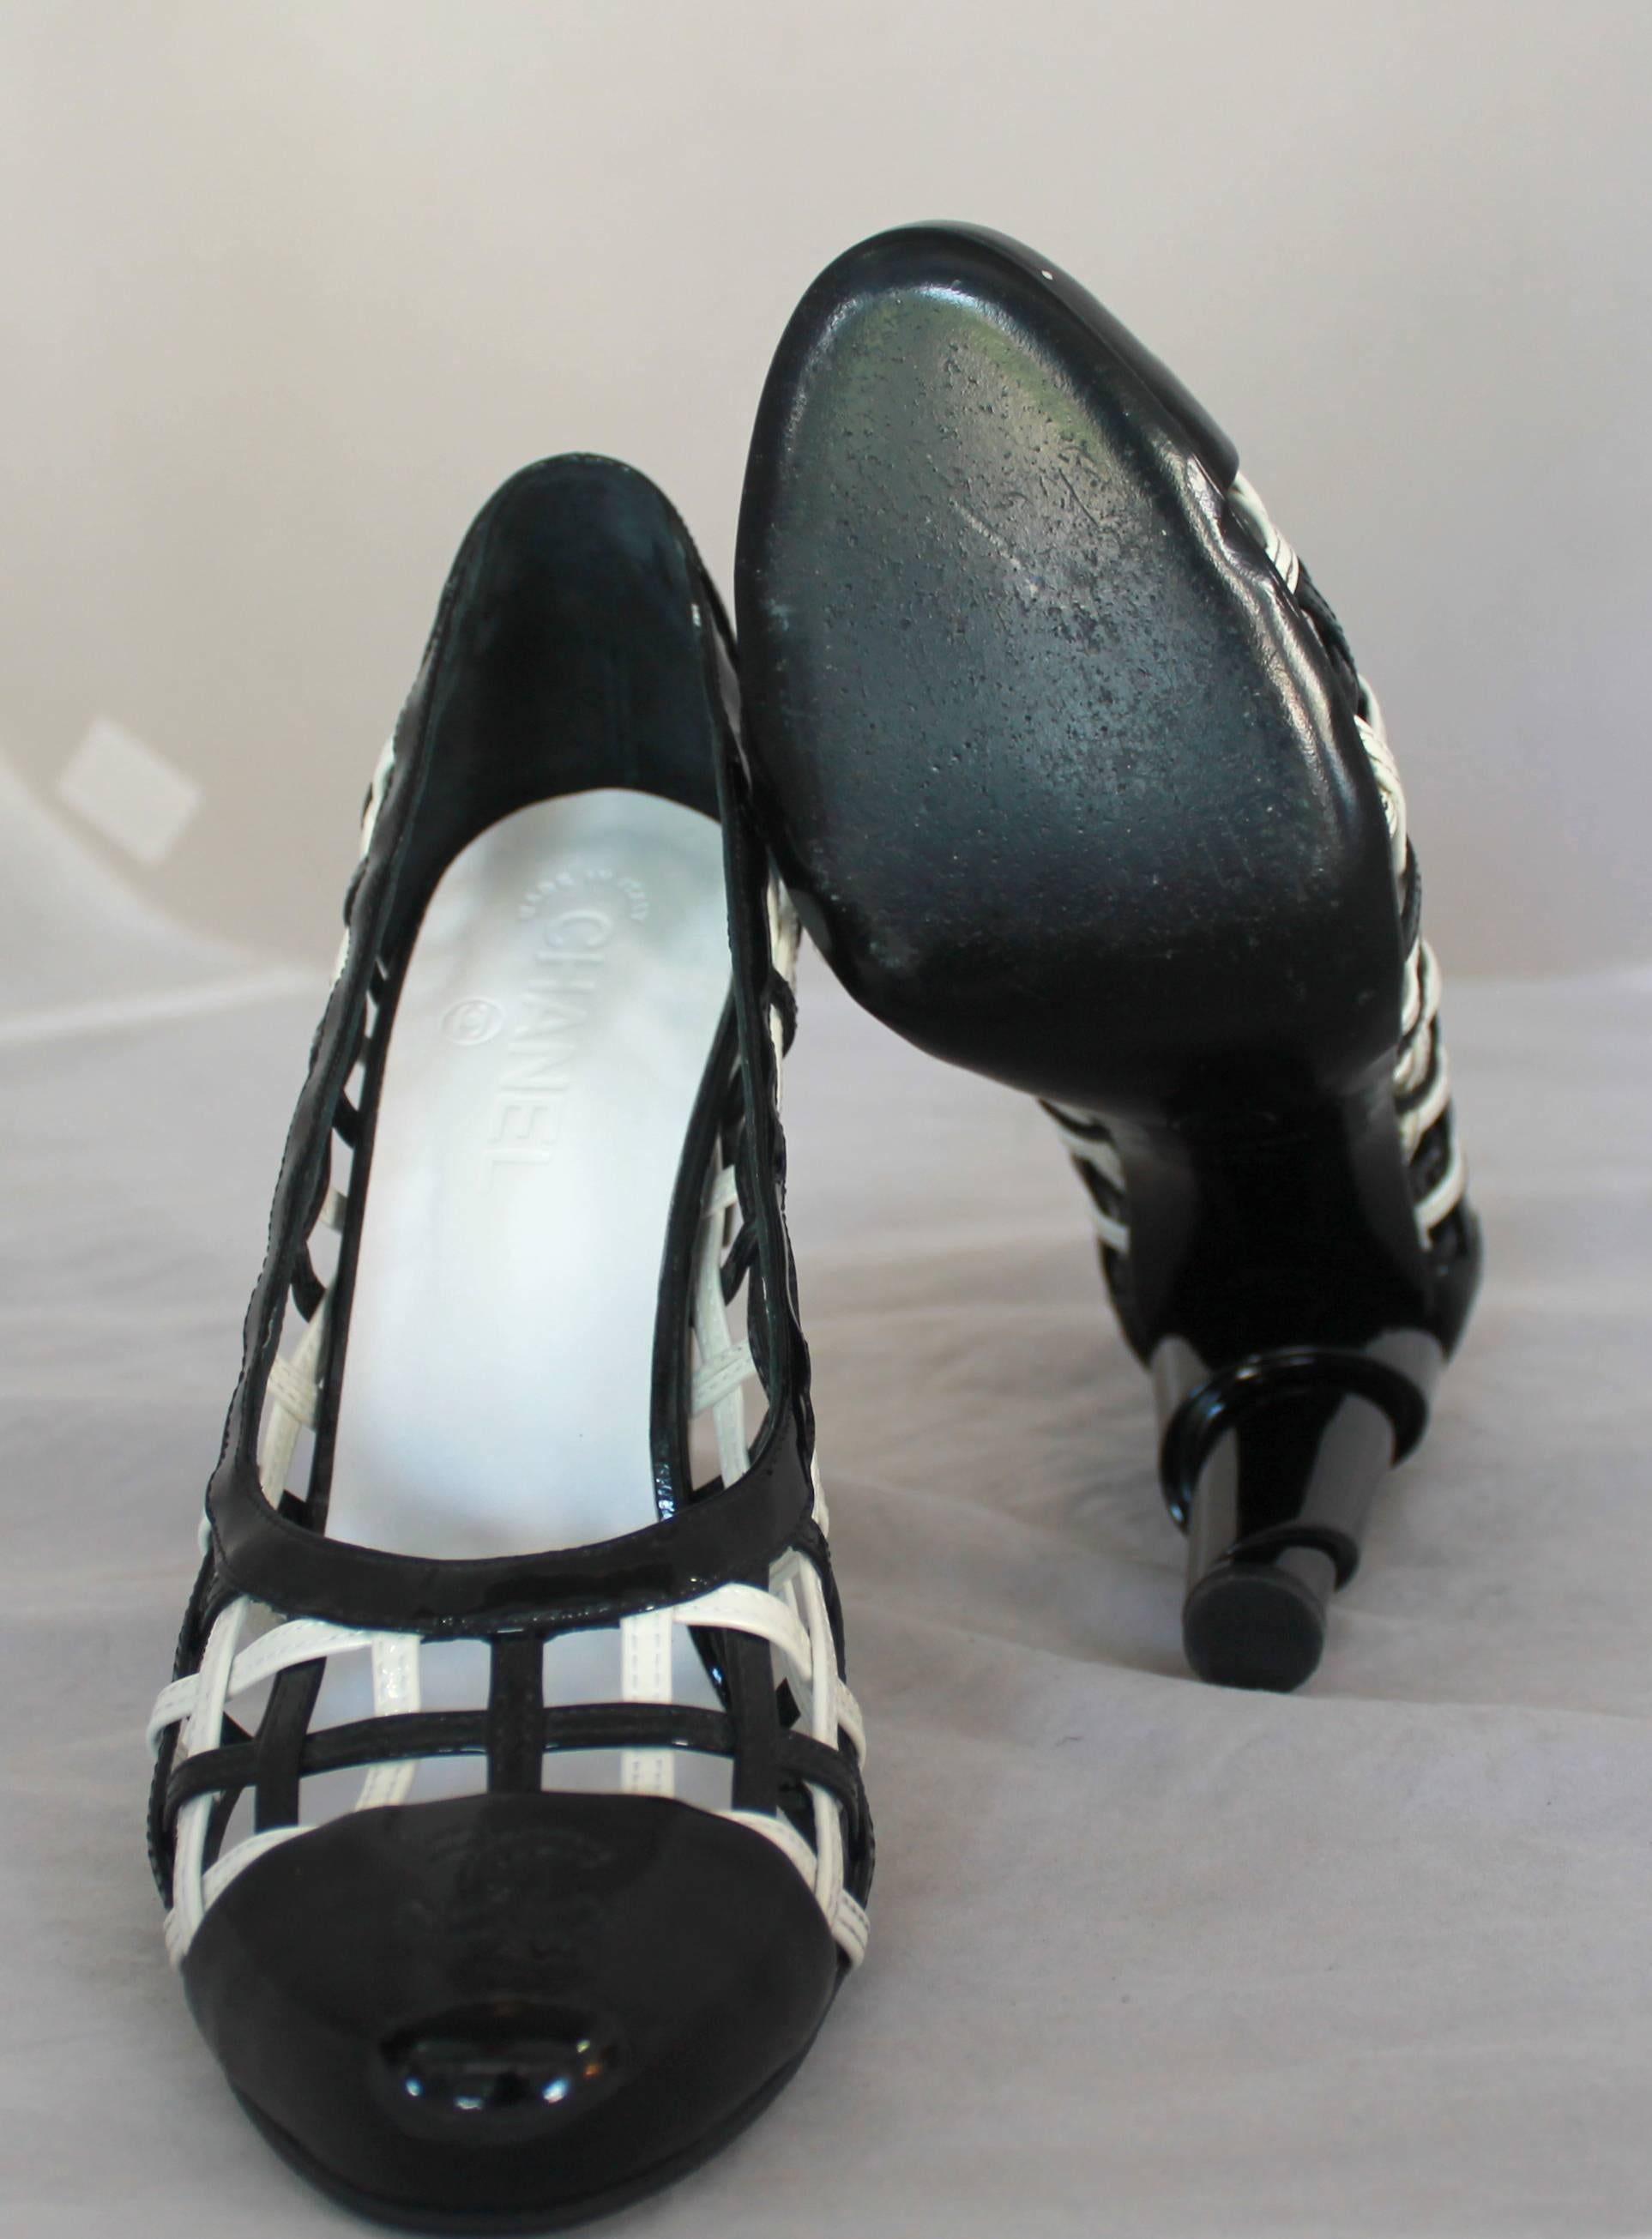 Chanel Black & White Patent Crisscross Pumps w/ Black Toe - 40.5 3